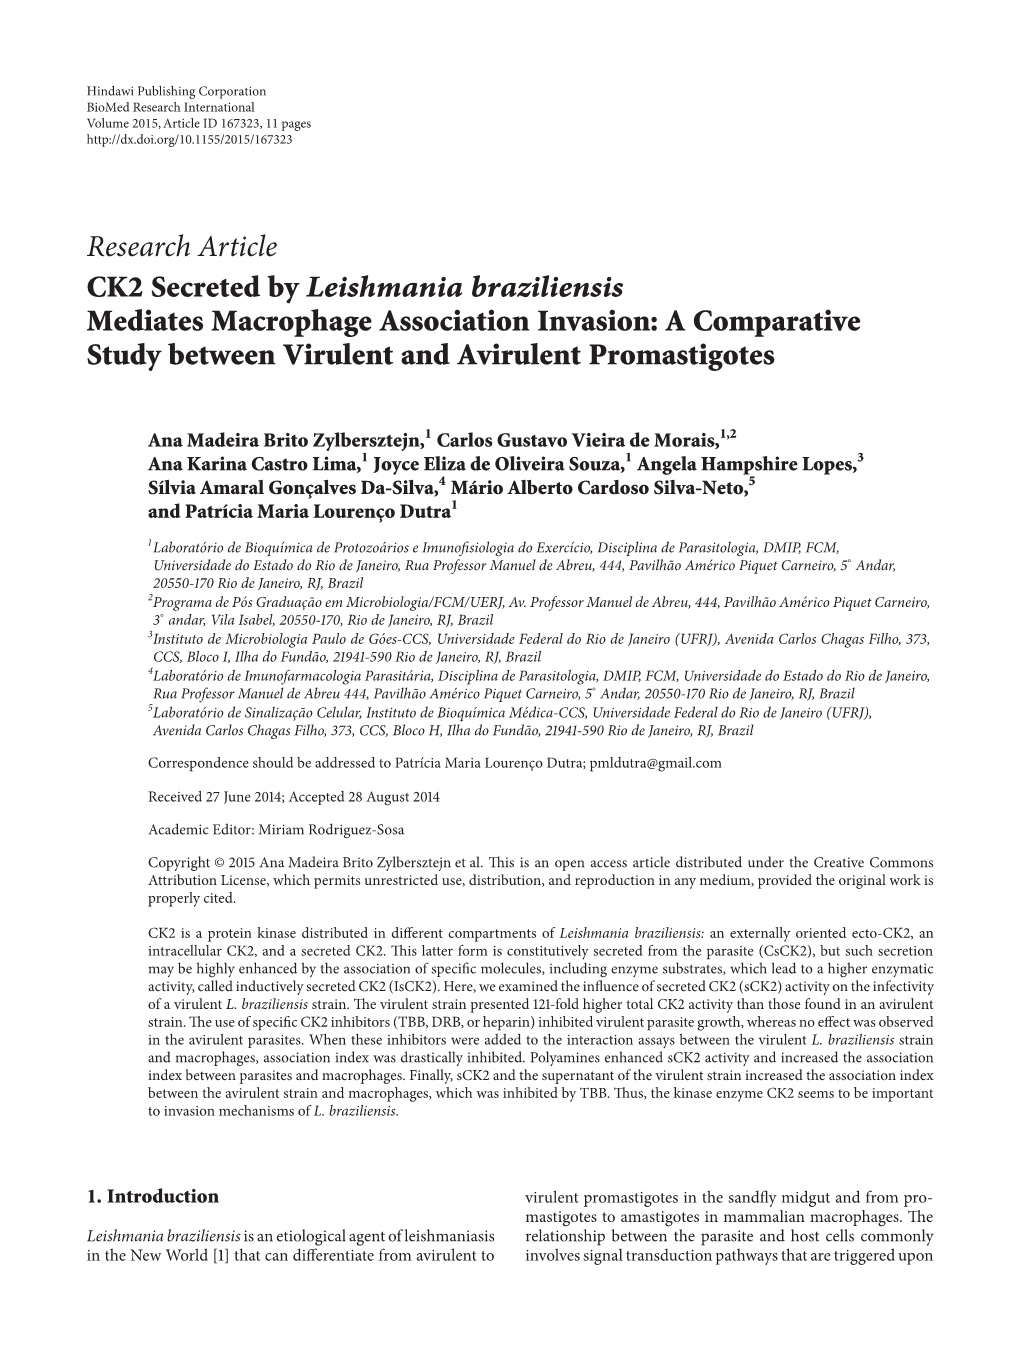 Mediates Macrophage Association Invasion: a Comparative Study Between Virulent and Avirulent Promastigotes